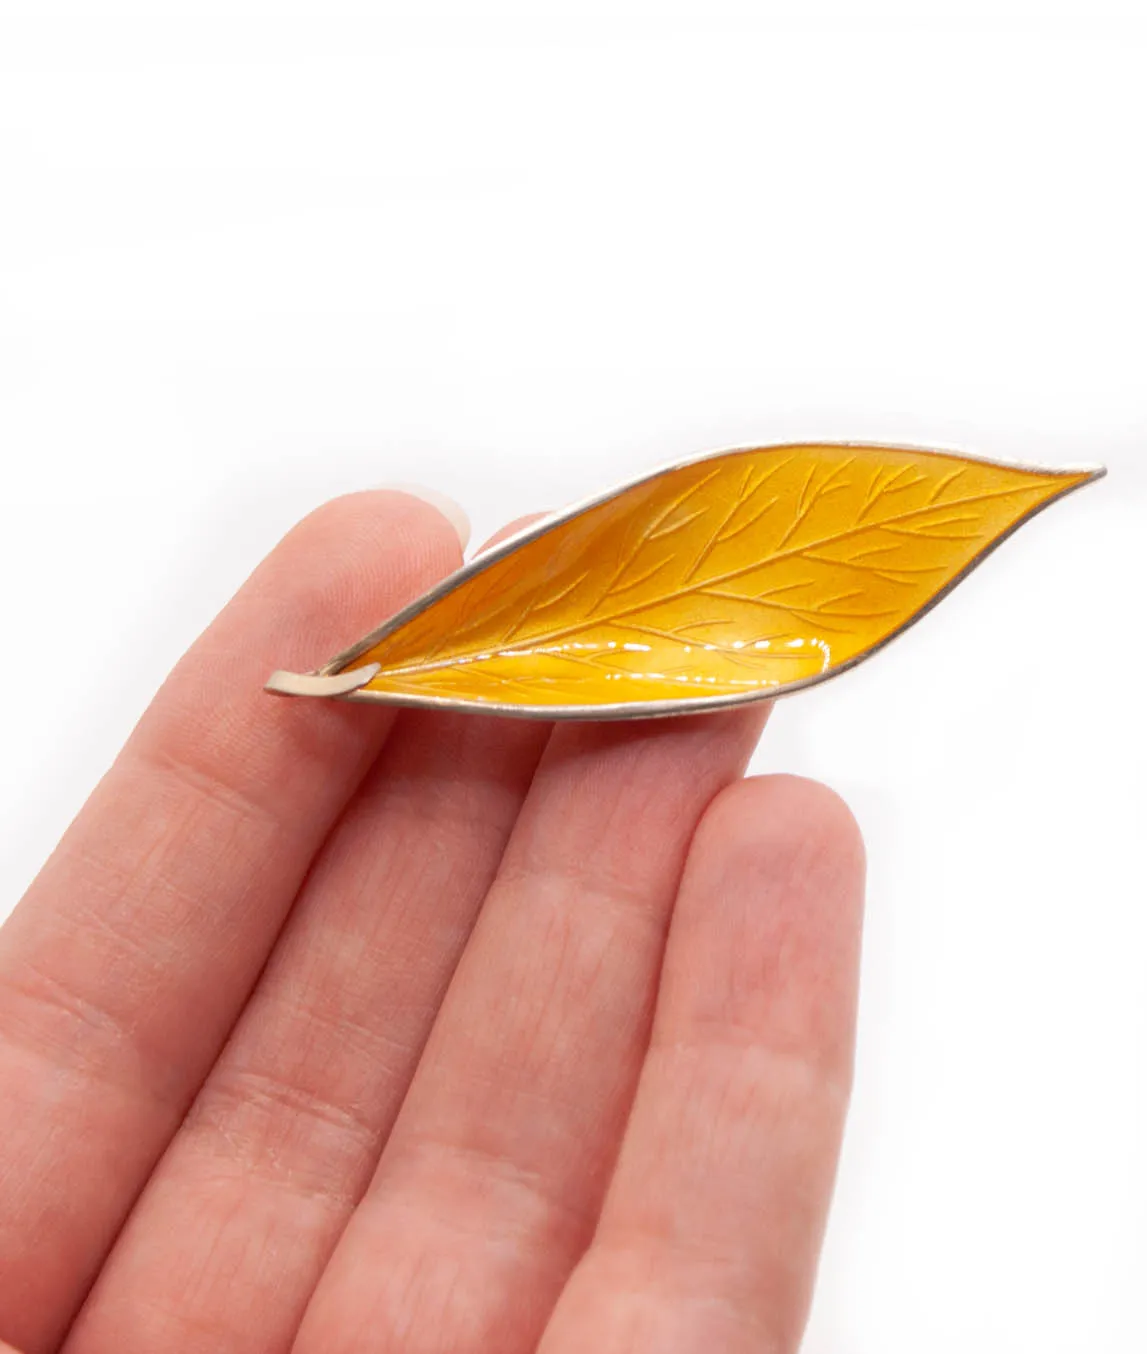 Yellow enamel on silver leaf brooch by David Andersen held in a hand